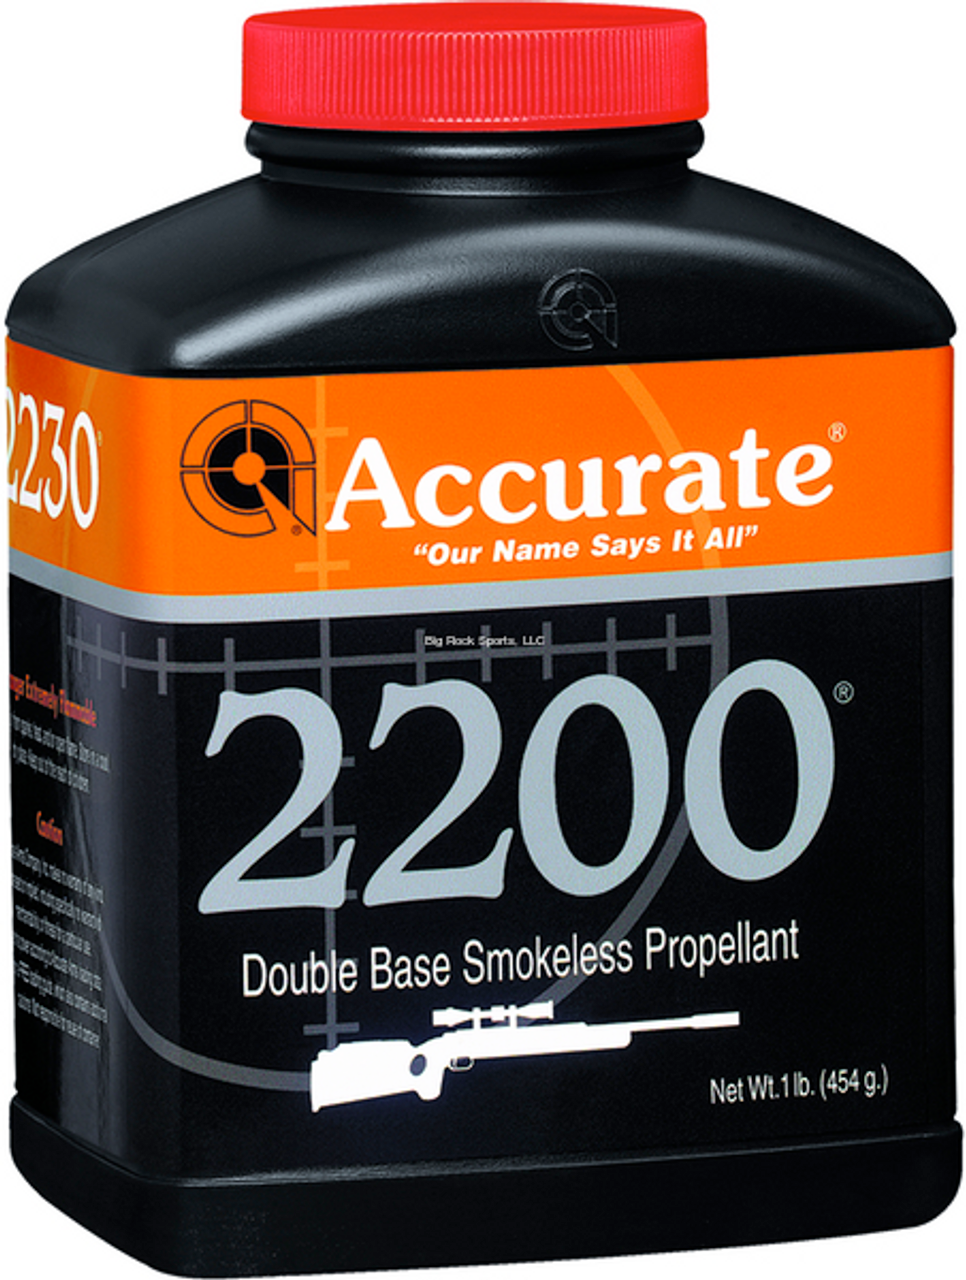 Accurate 2200 Smokeless Propellant Rifle Powder, 1 lb